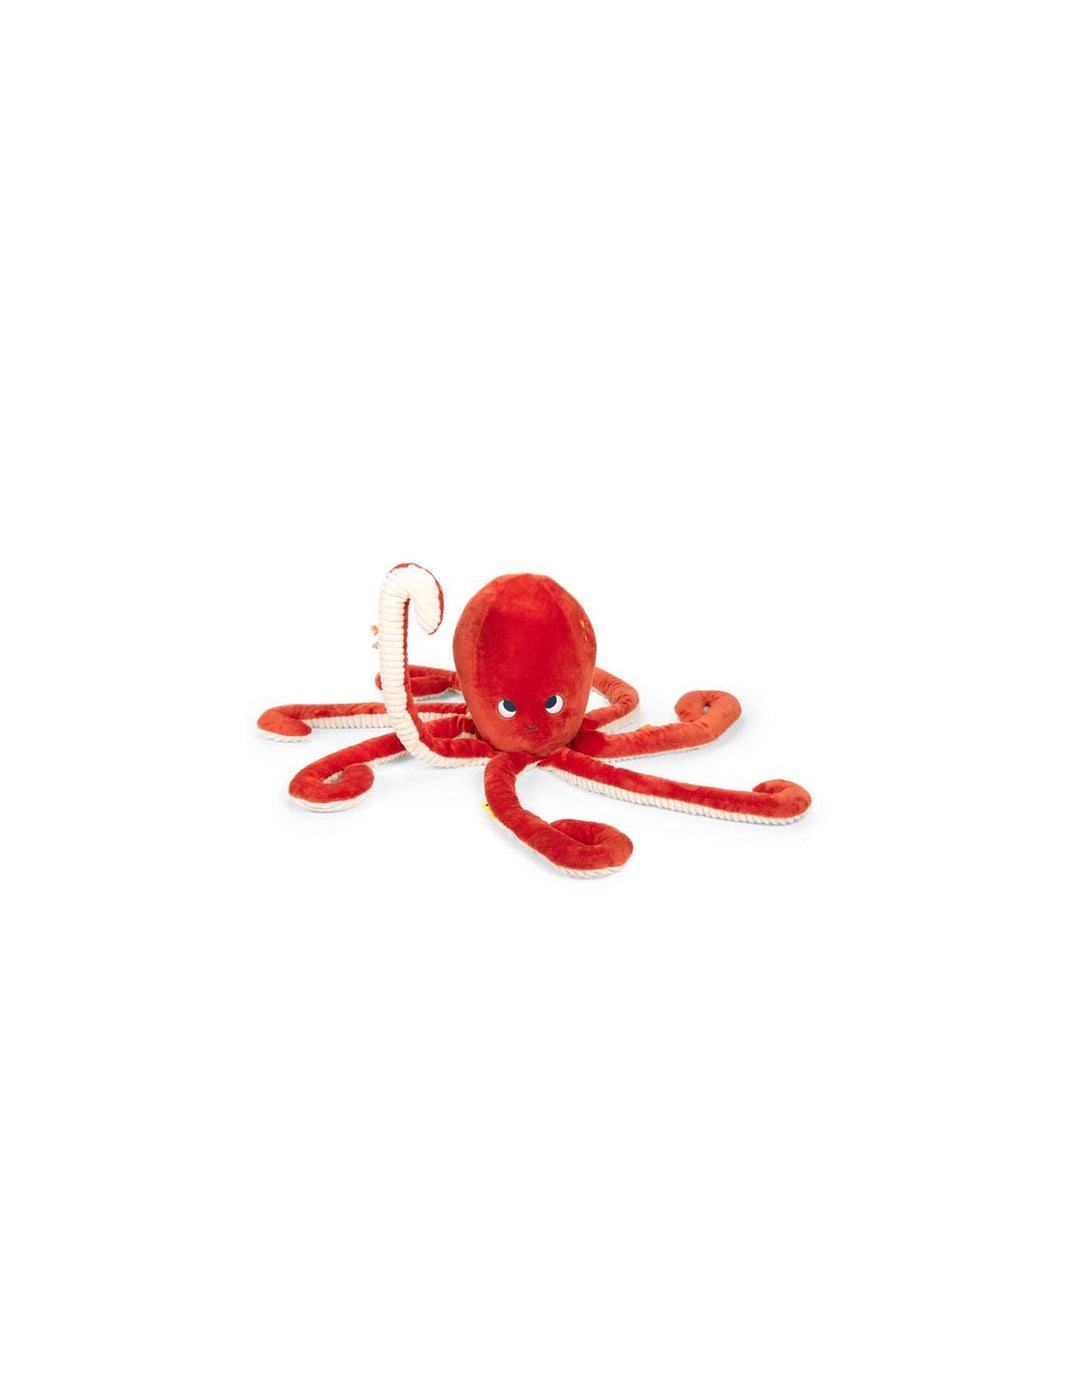 Large Octopus - Les Aventures de Paulie - لعب الاطفال الطرية